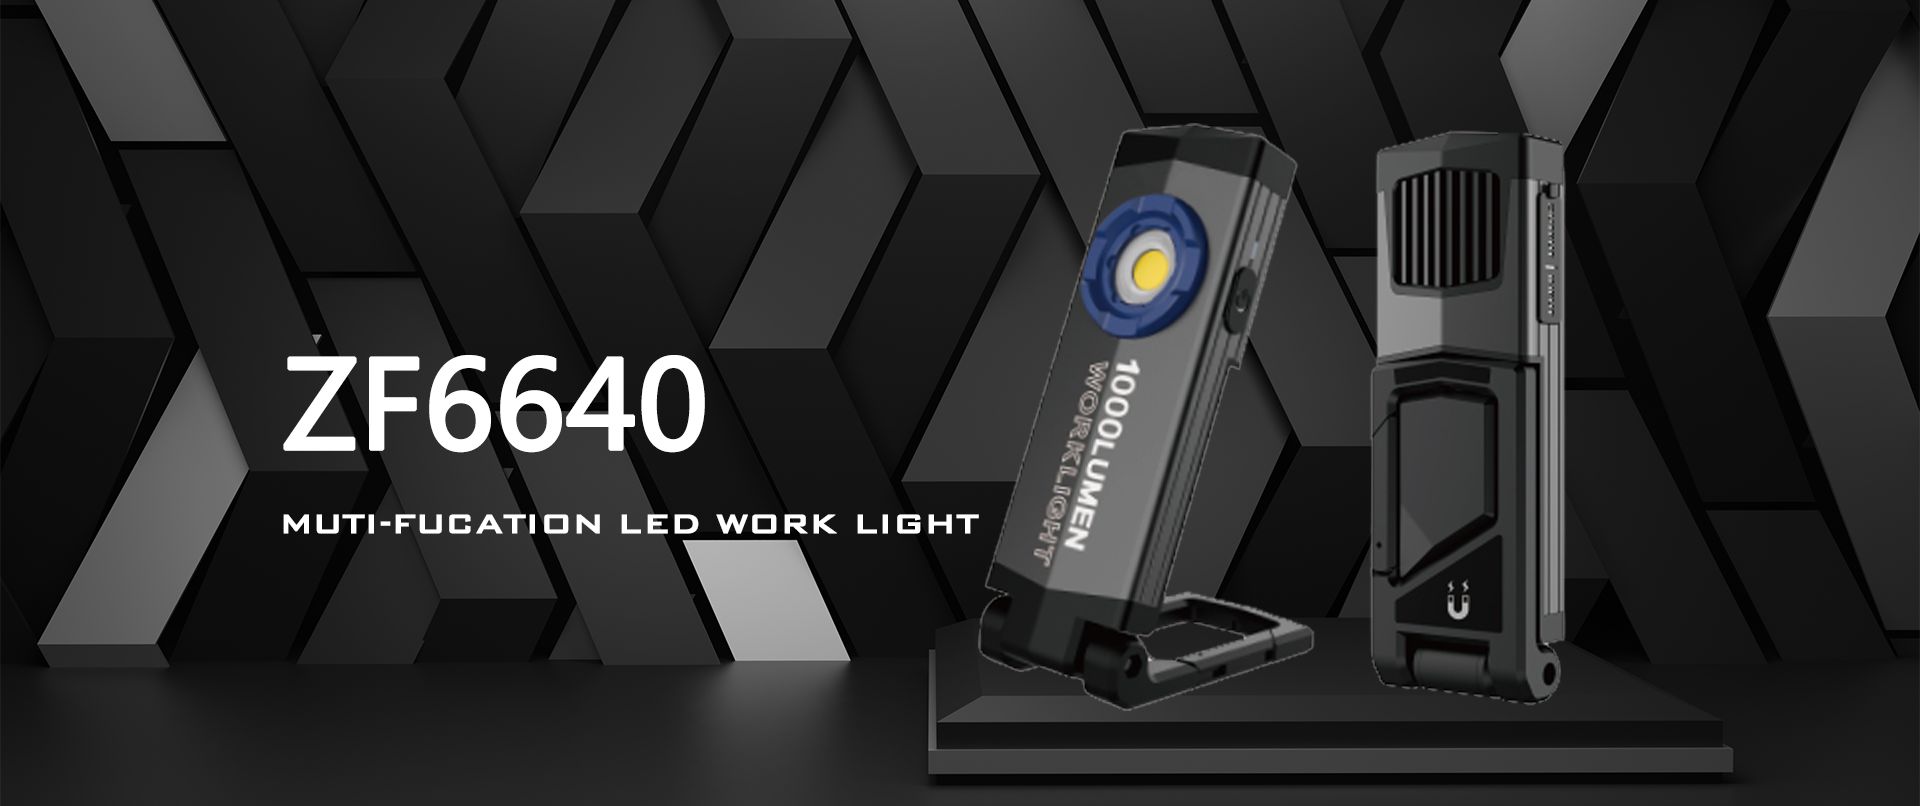 https://www.cnblight.com/folding-design-muti-Functional-led-flashlight-product/